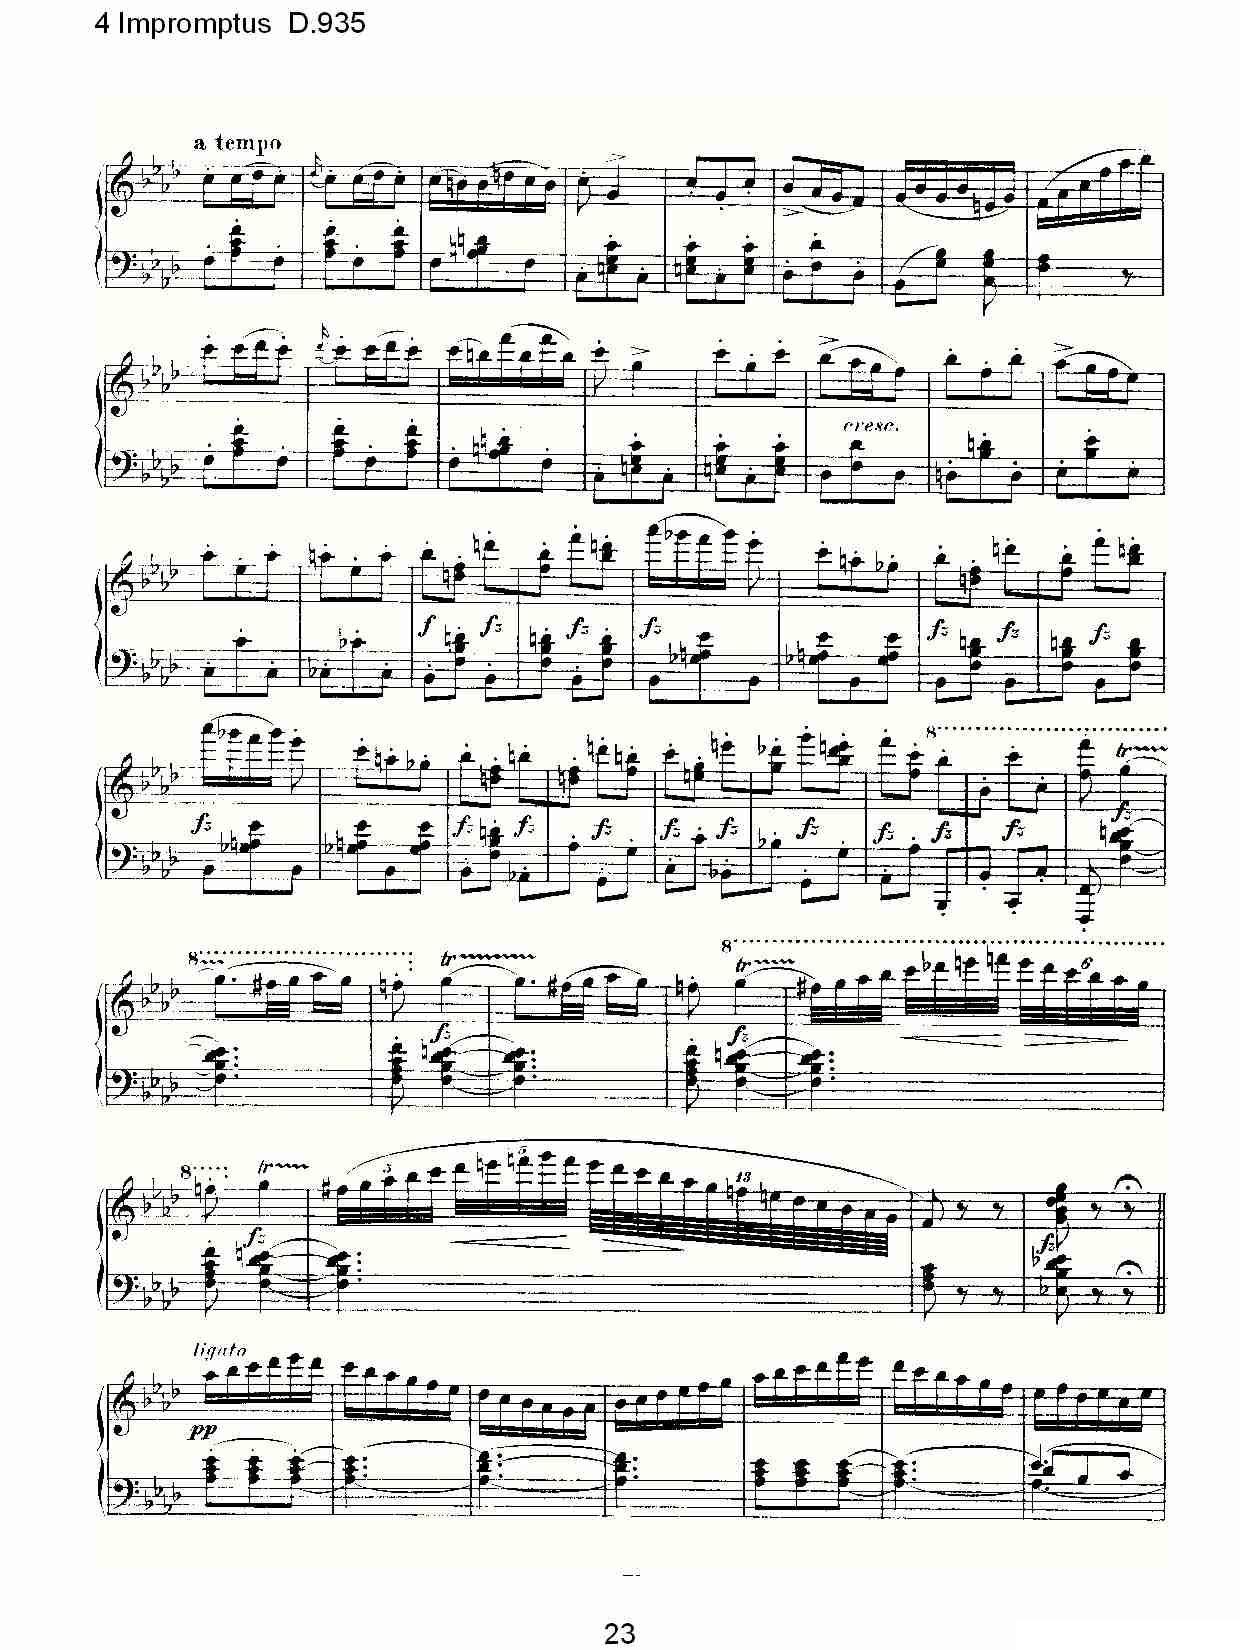 4 Impromptus D.935（4人即兴演奏D.935）钢琴曲谱（图23）